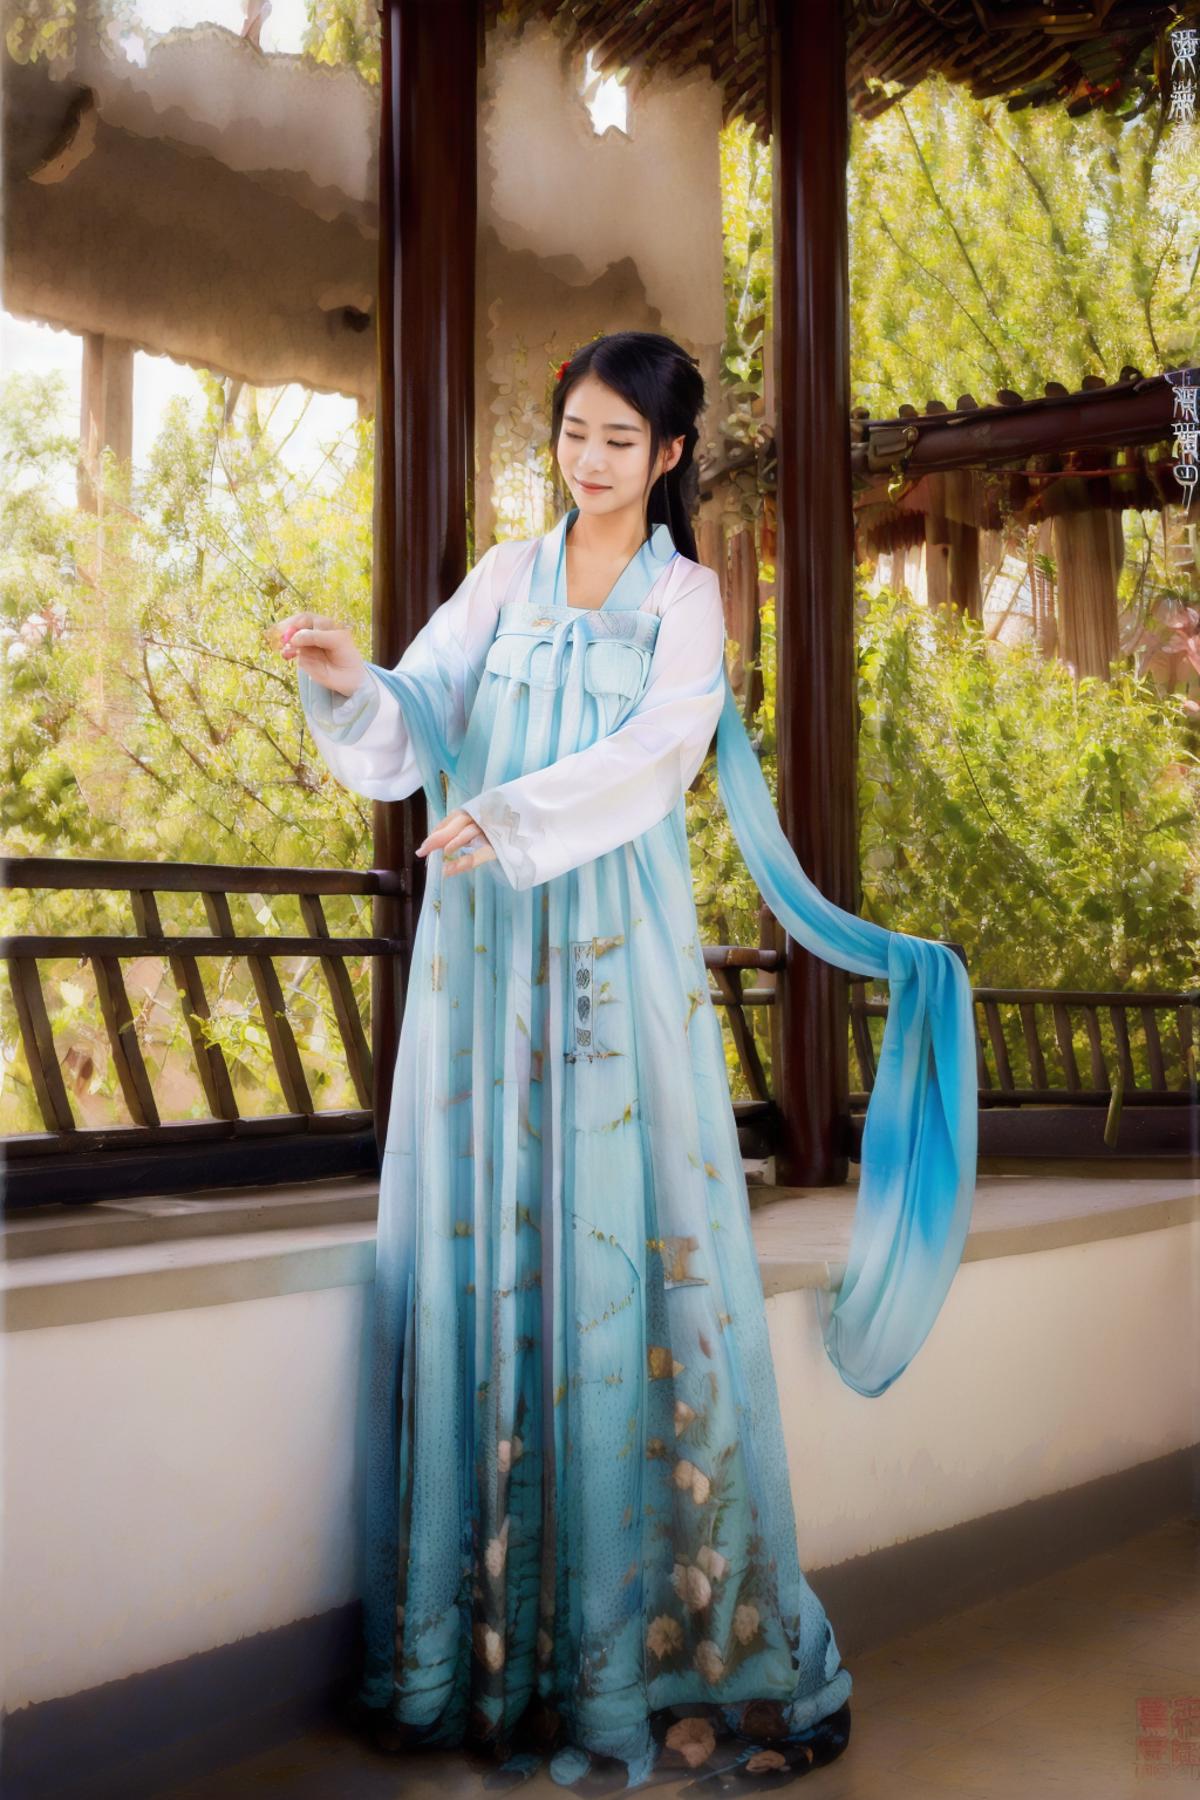 【Realistic】淡蓝汉服齐胸襦裙 China Dress / Hanfu image by EmptyBellPainter